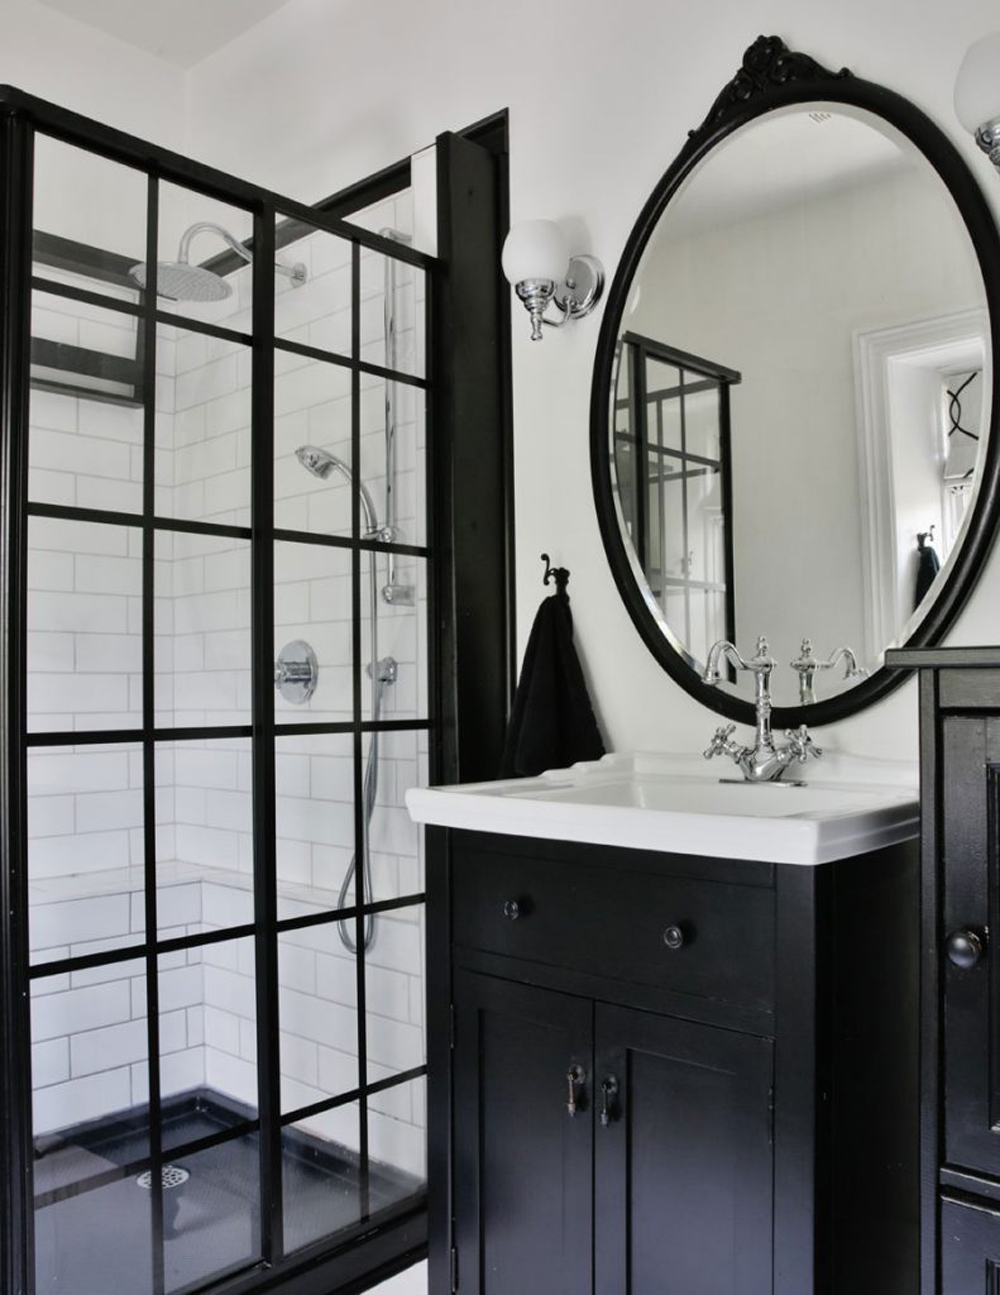 Our 18 Most Popular Bathroom Design Ideas on Pinterest   HGTV Canada